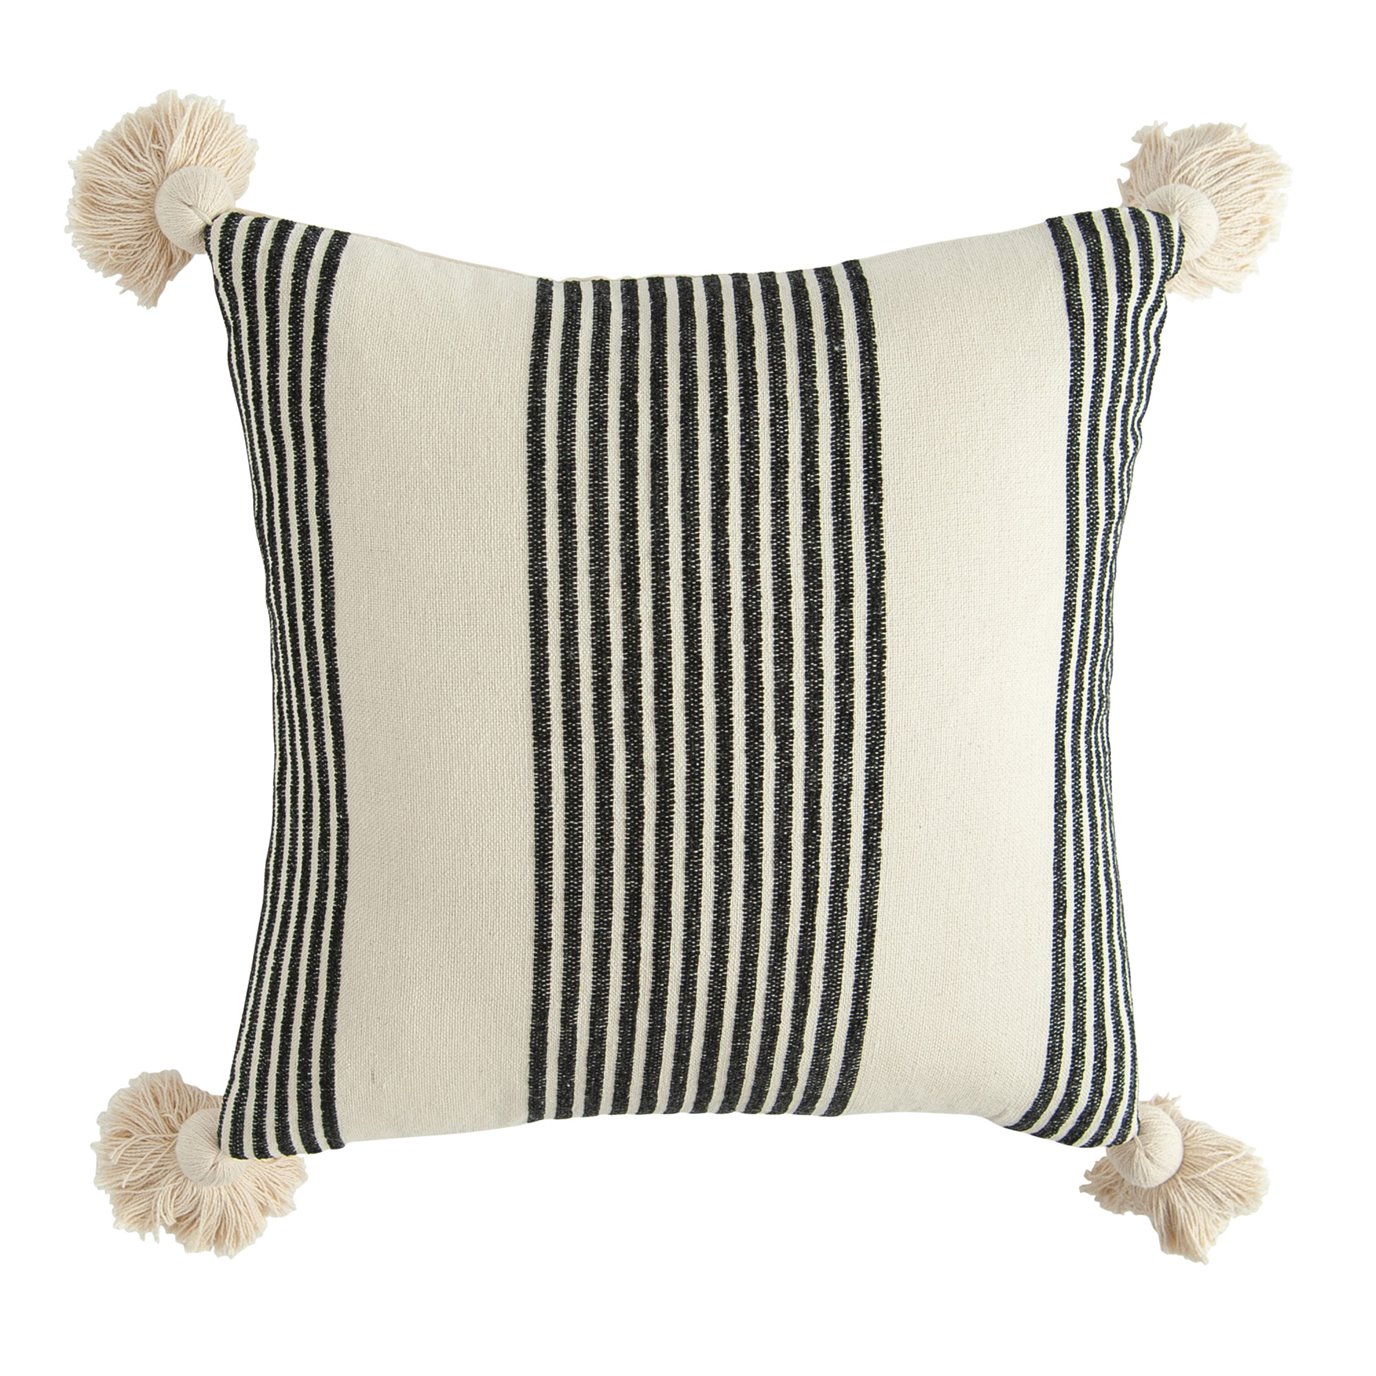 Cream Cotton & Chenille Pillow with Black Stripes & Tassels